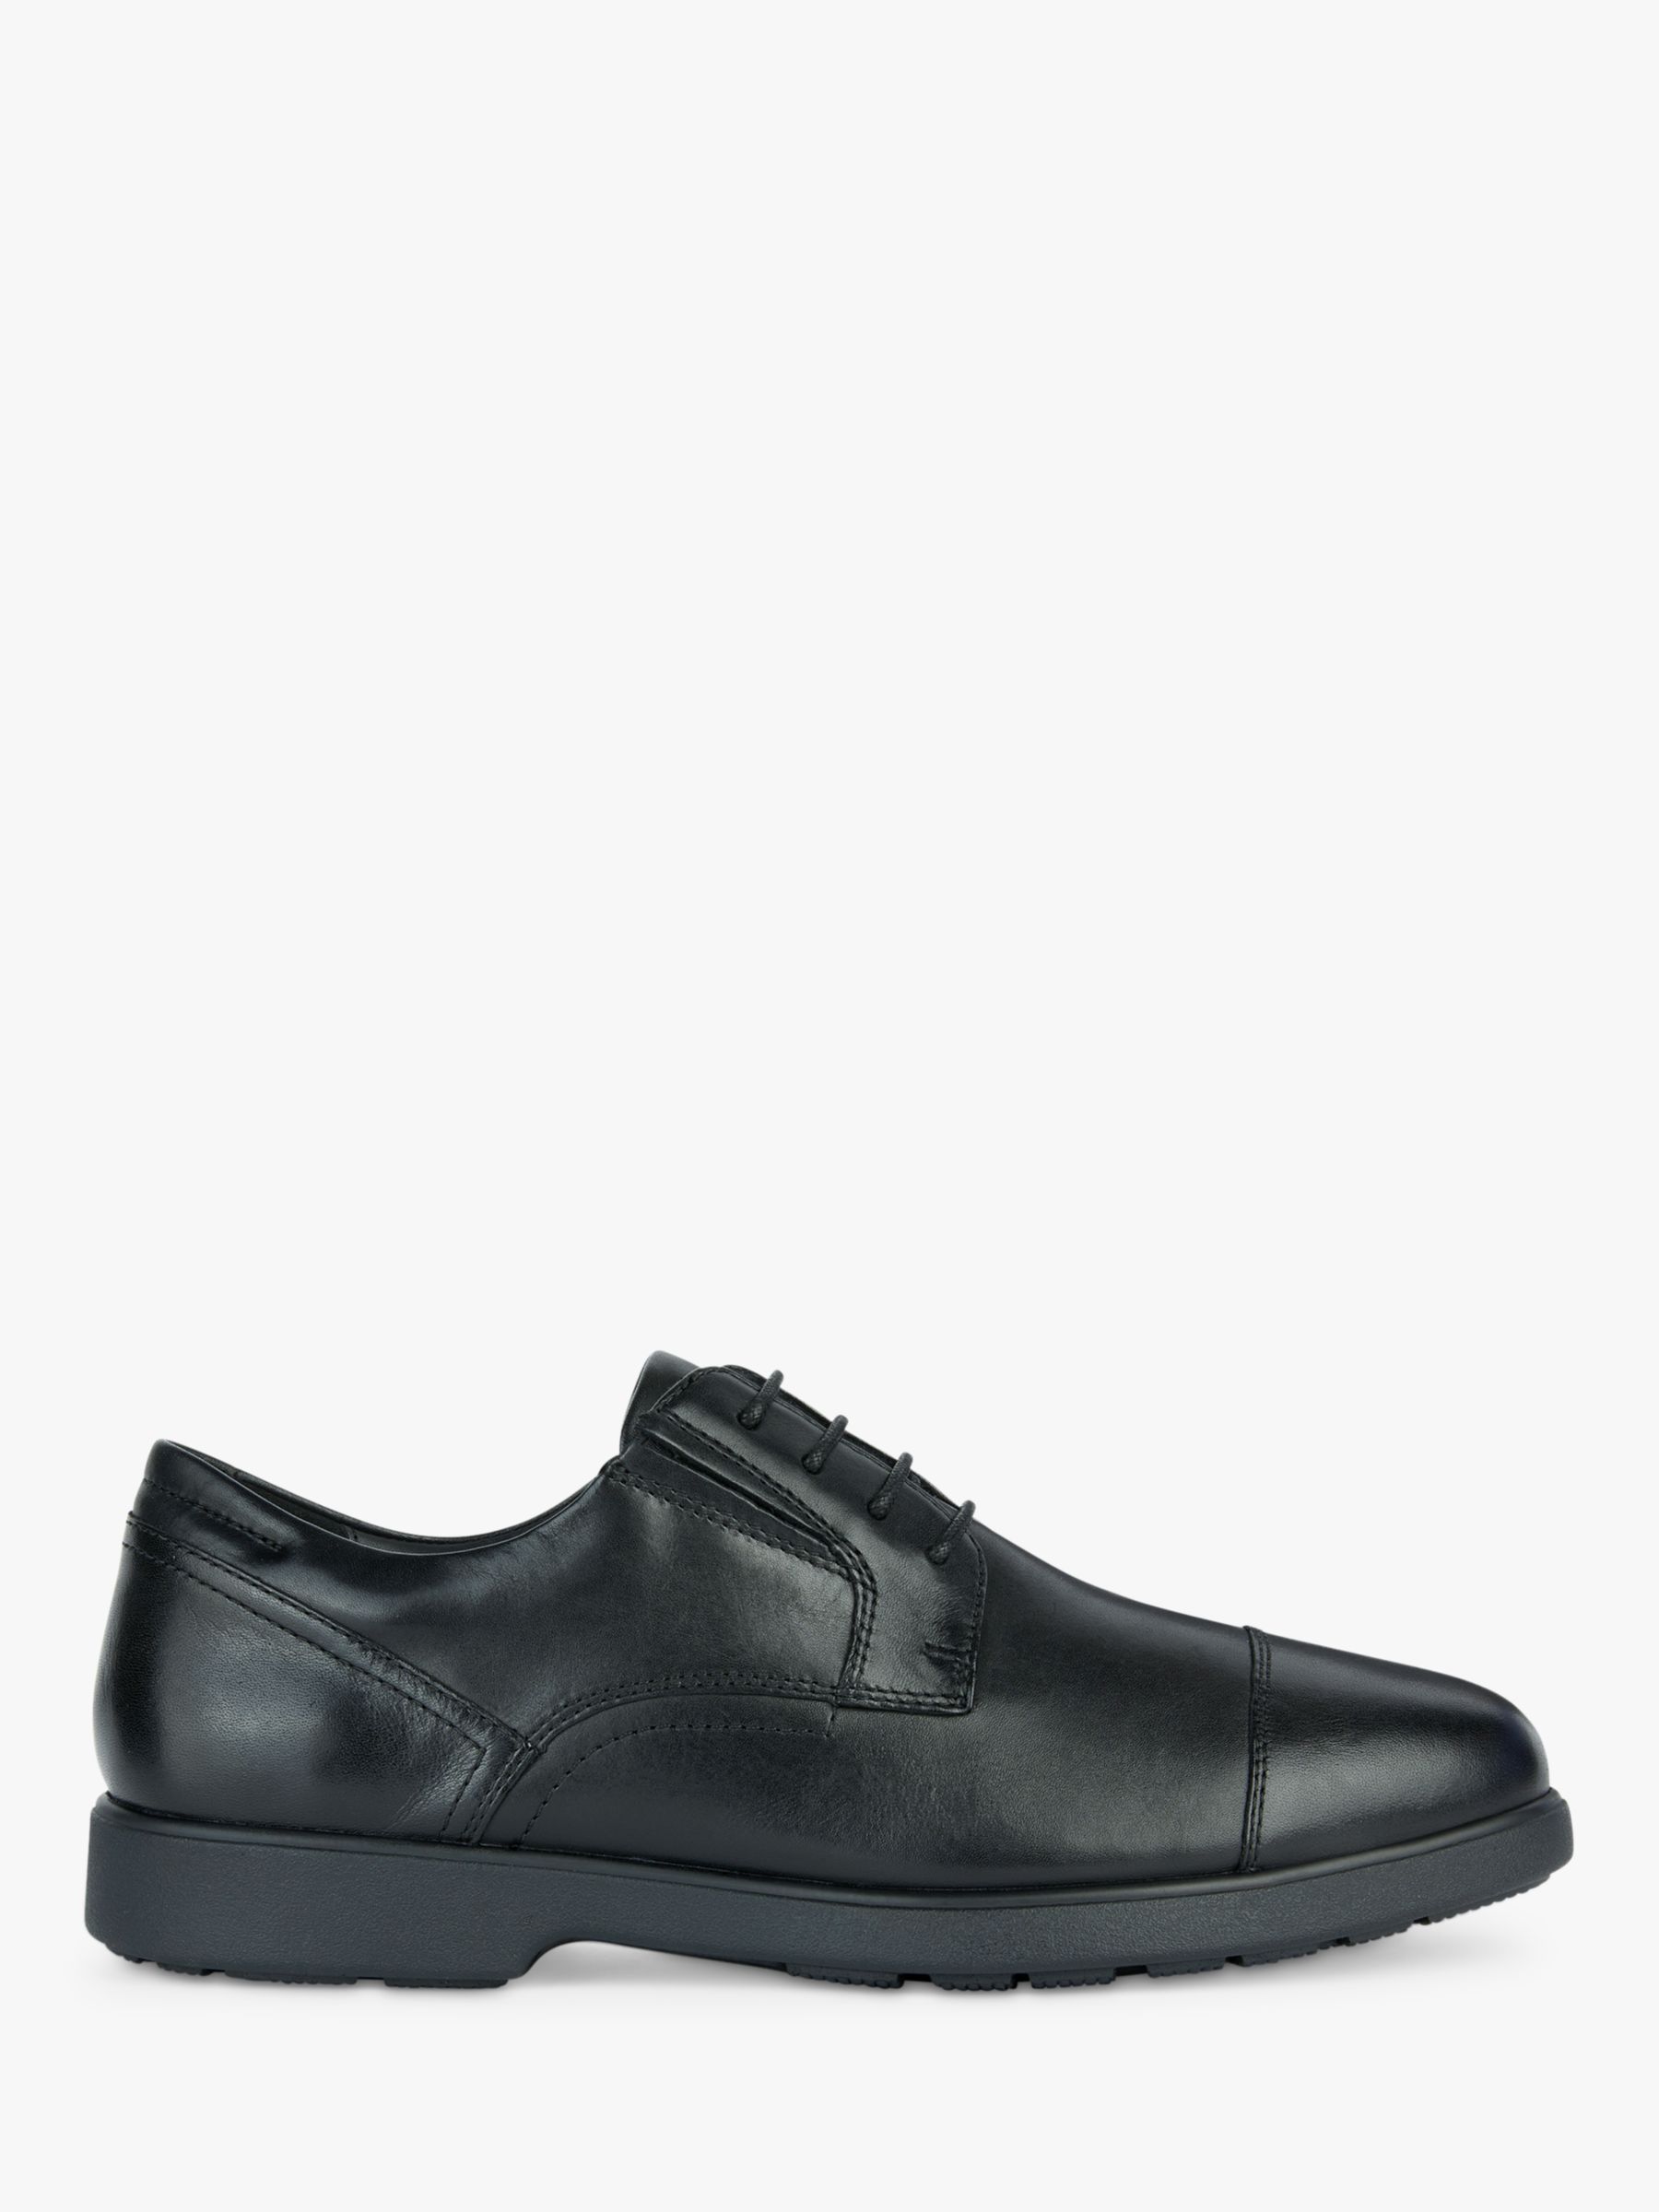 Geox Spherica EC11 Leather Oxford Shoes, Black, 6